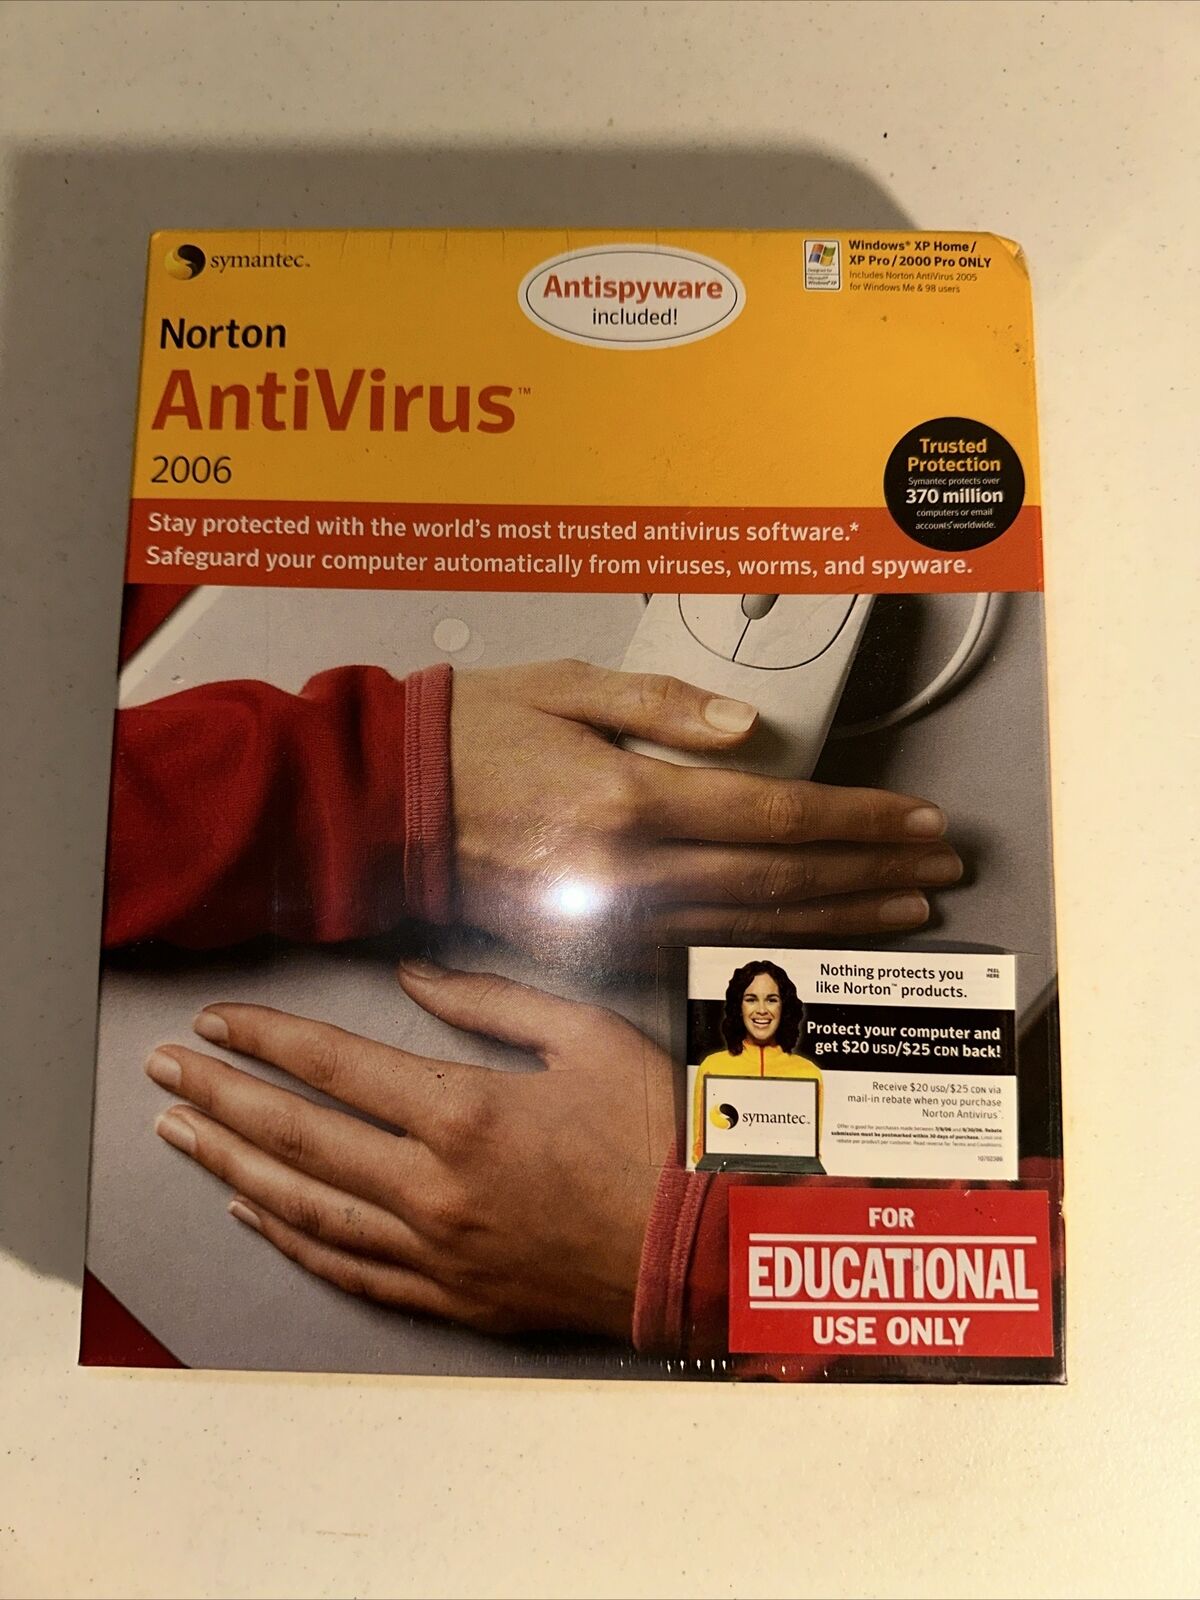 Norton Antivirus with Antispyware Windows XP Home/ XP Pro/ 2000 Pro Only. Sealed